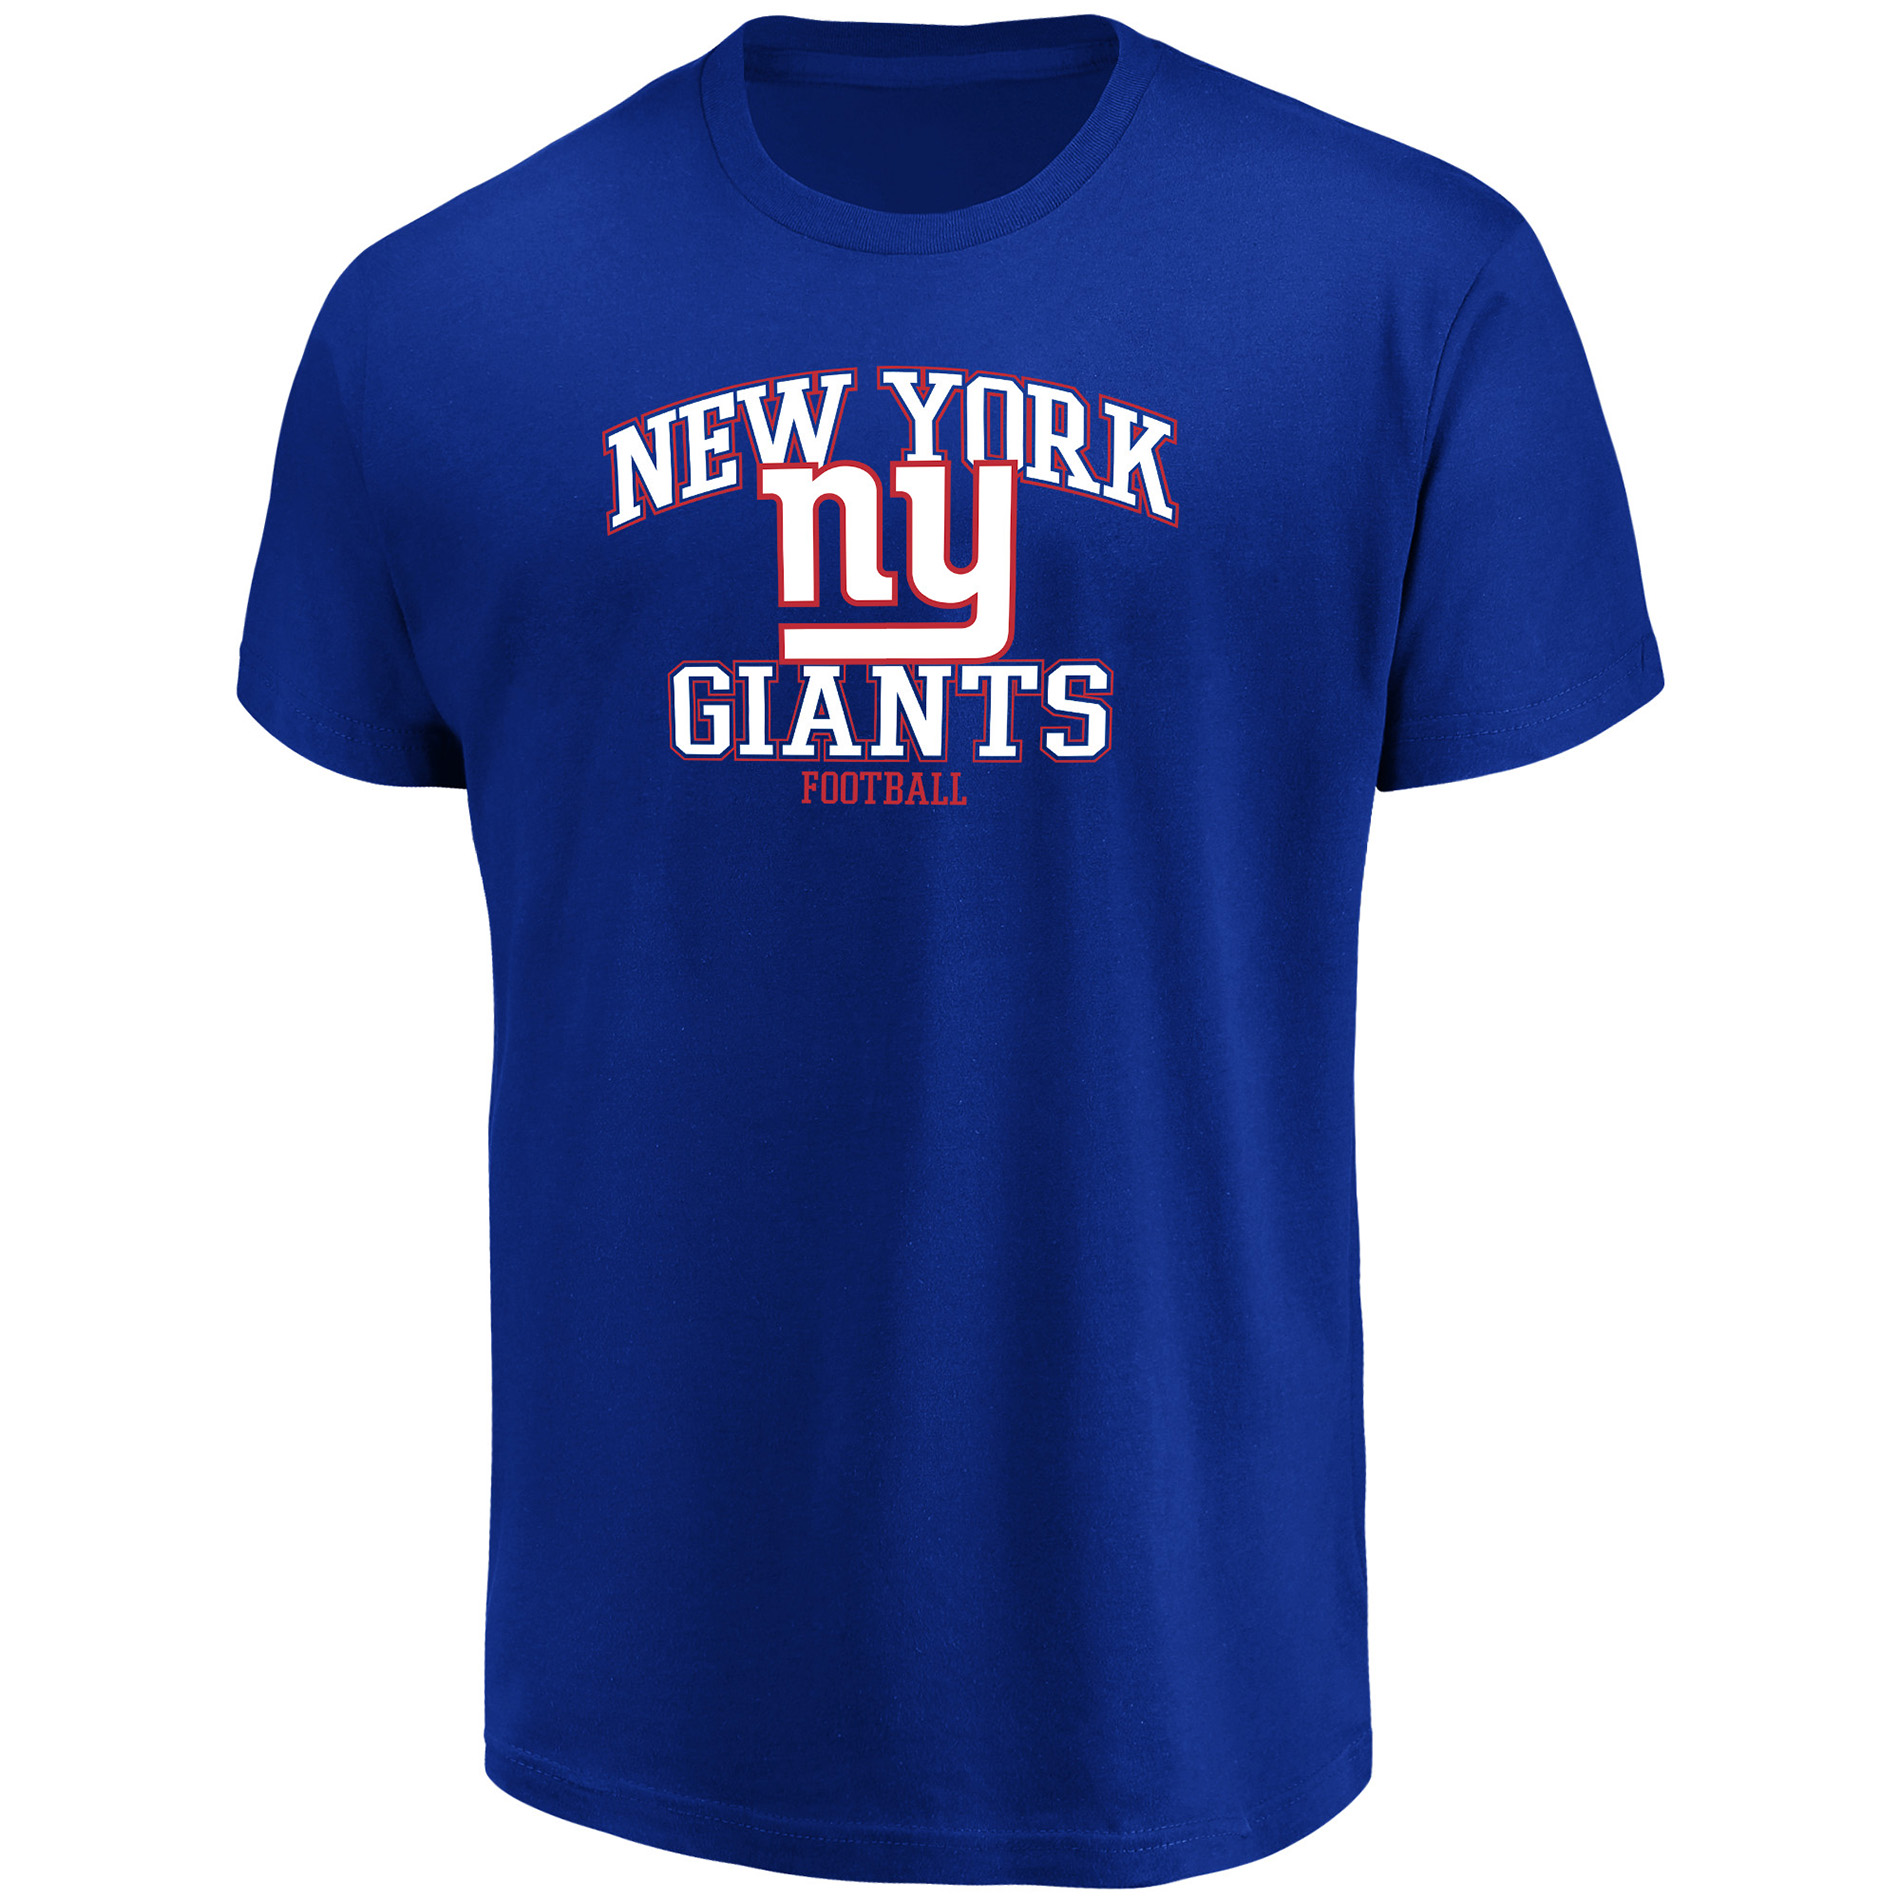 New York Giants Apparel - Kmart